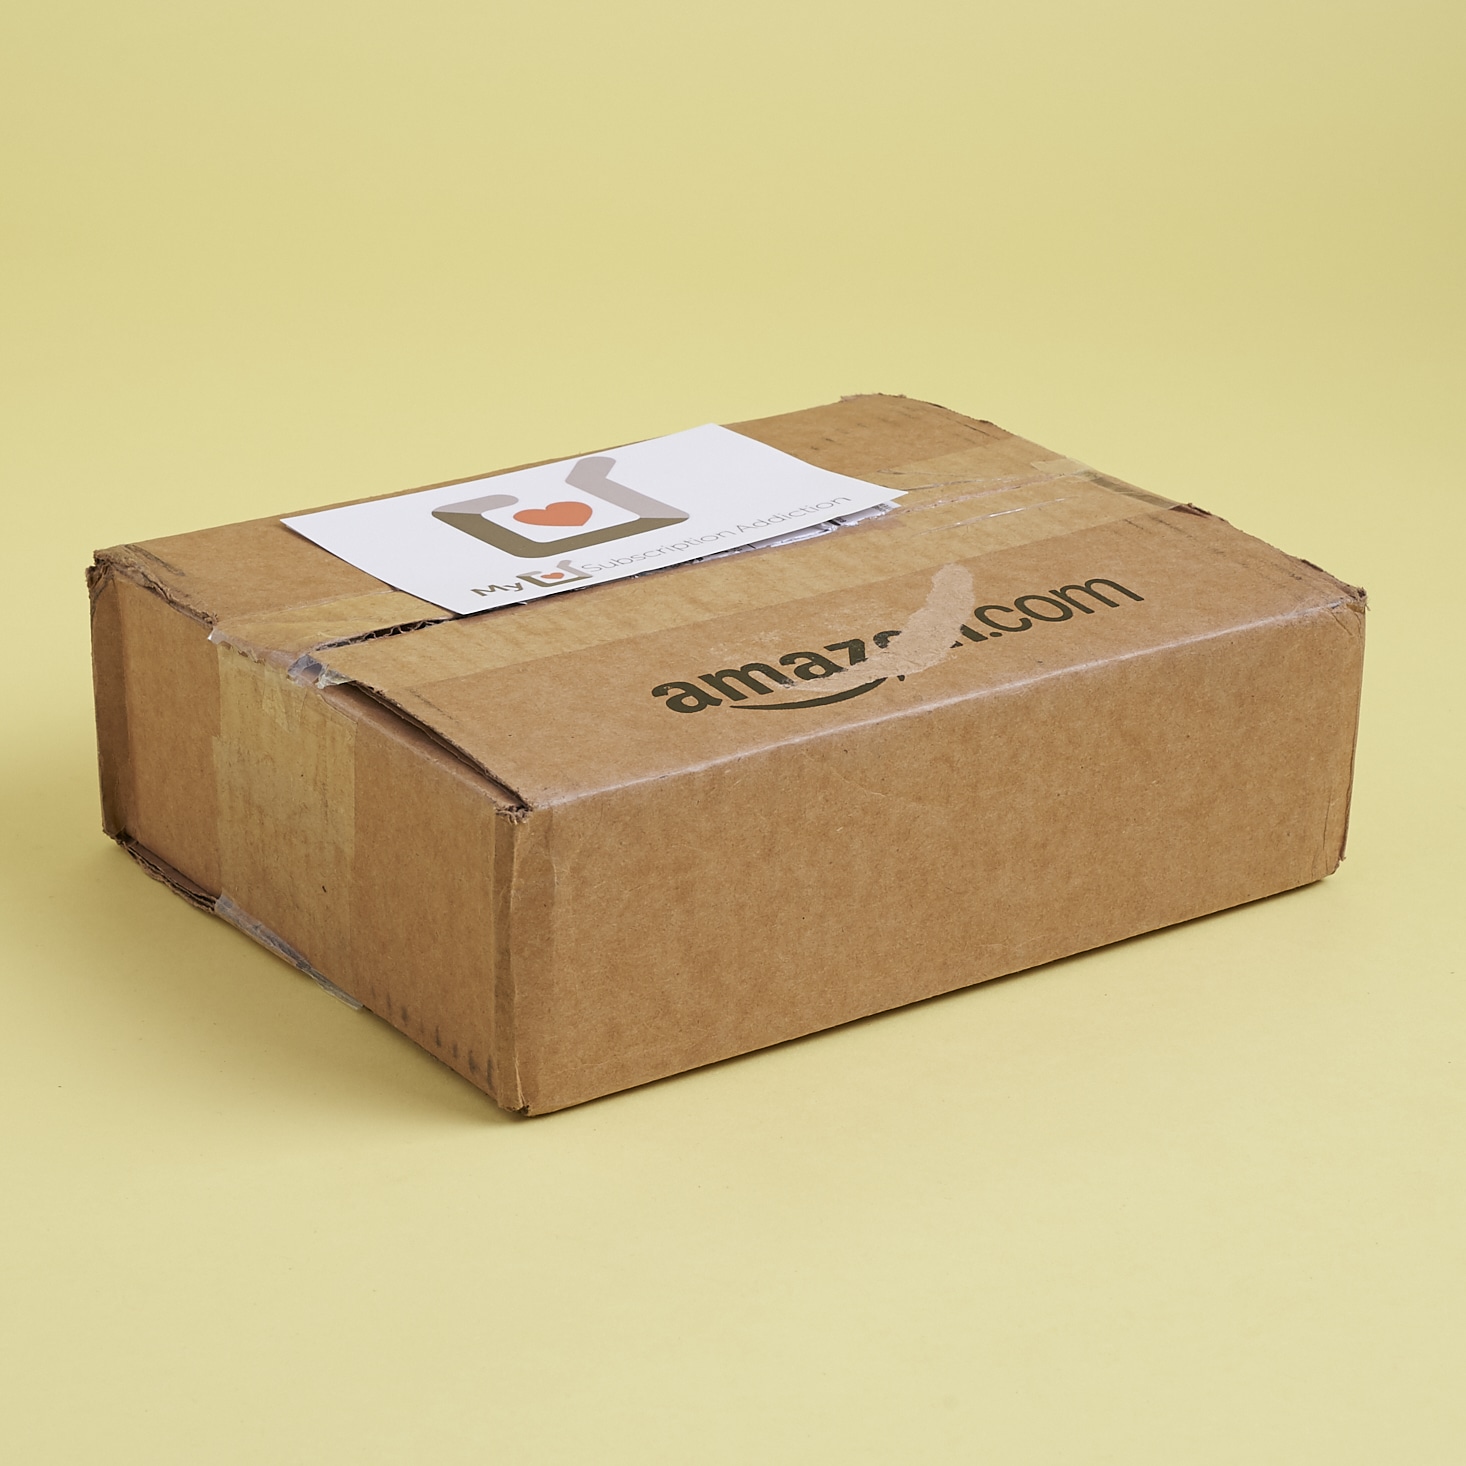 Amazon Children’s Snacks Sample Box Review – June 2017